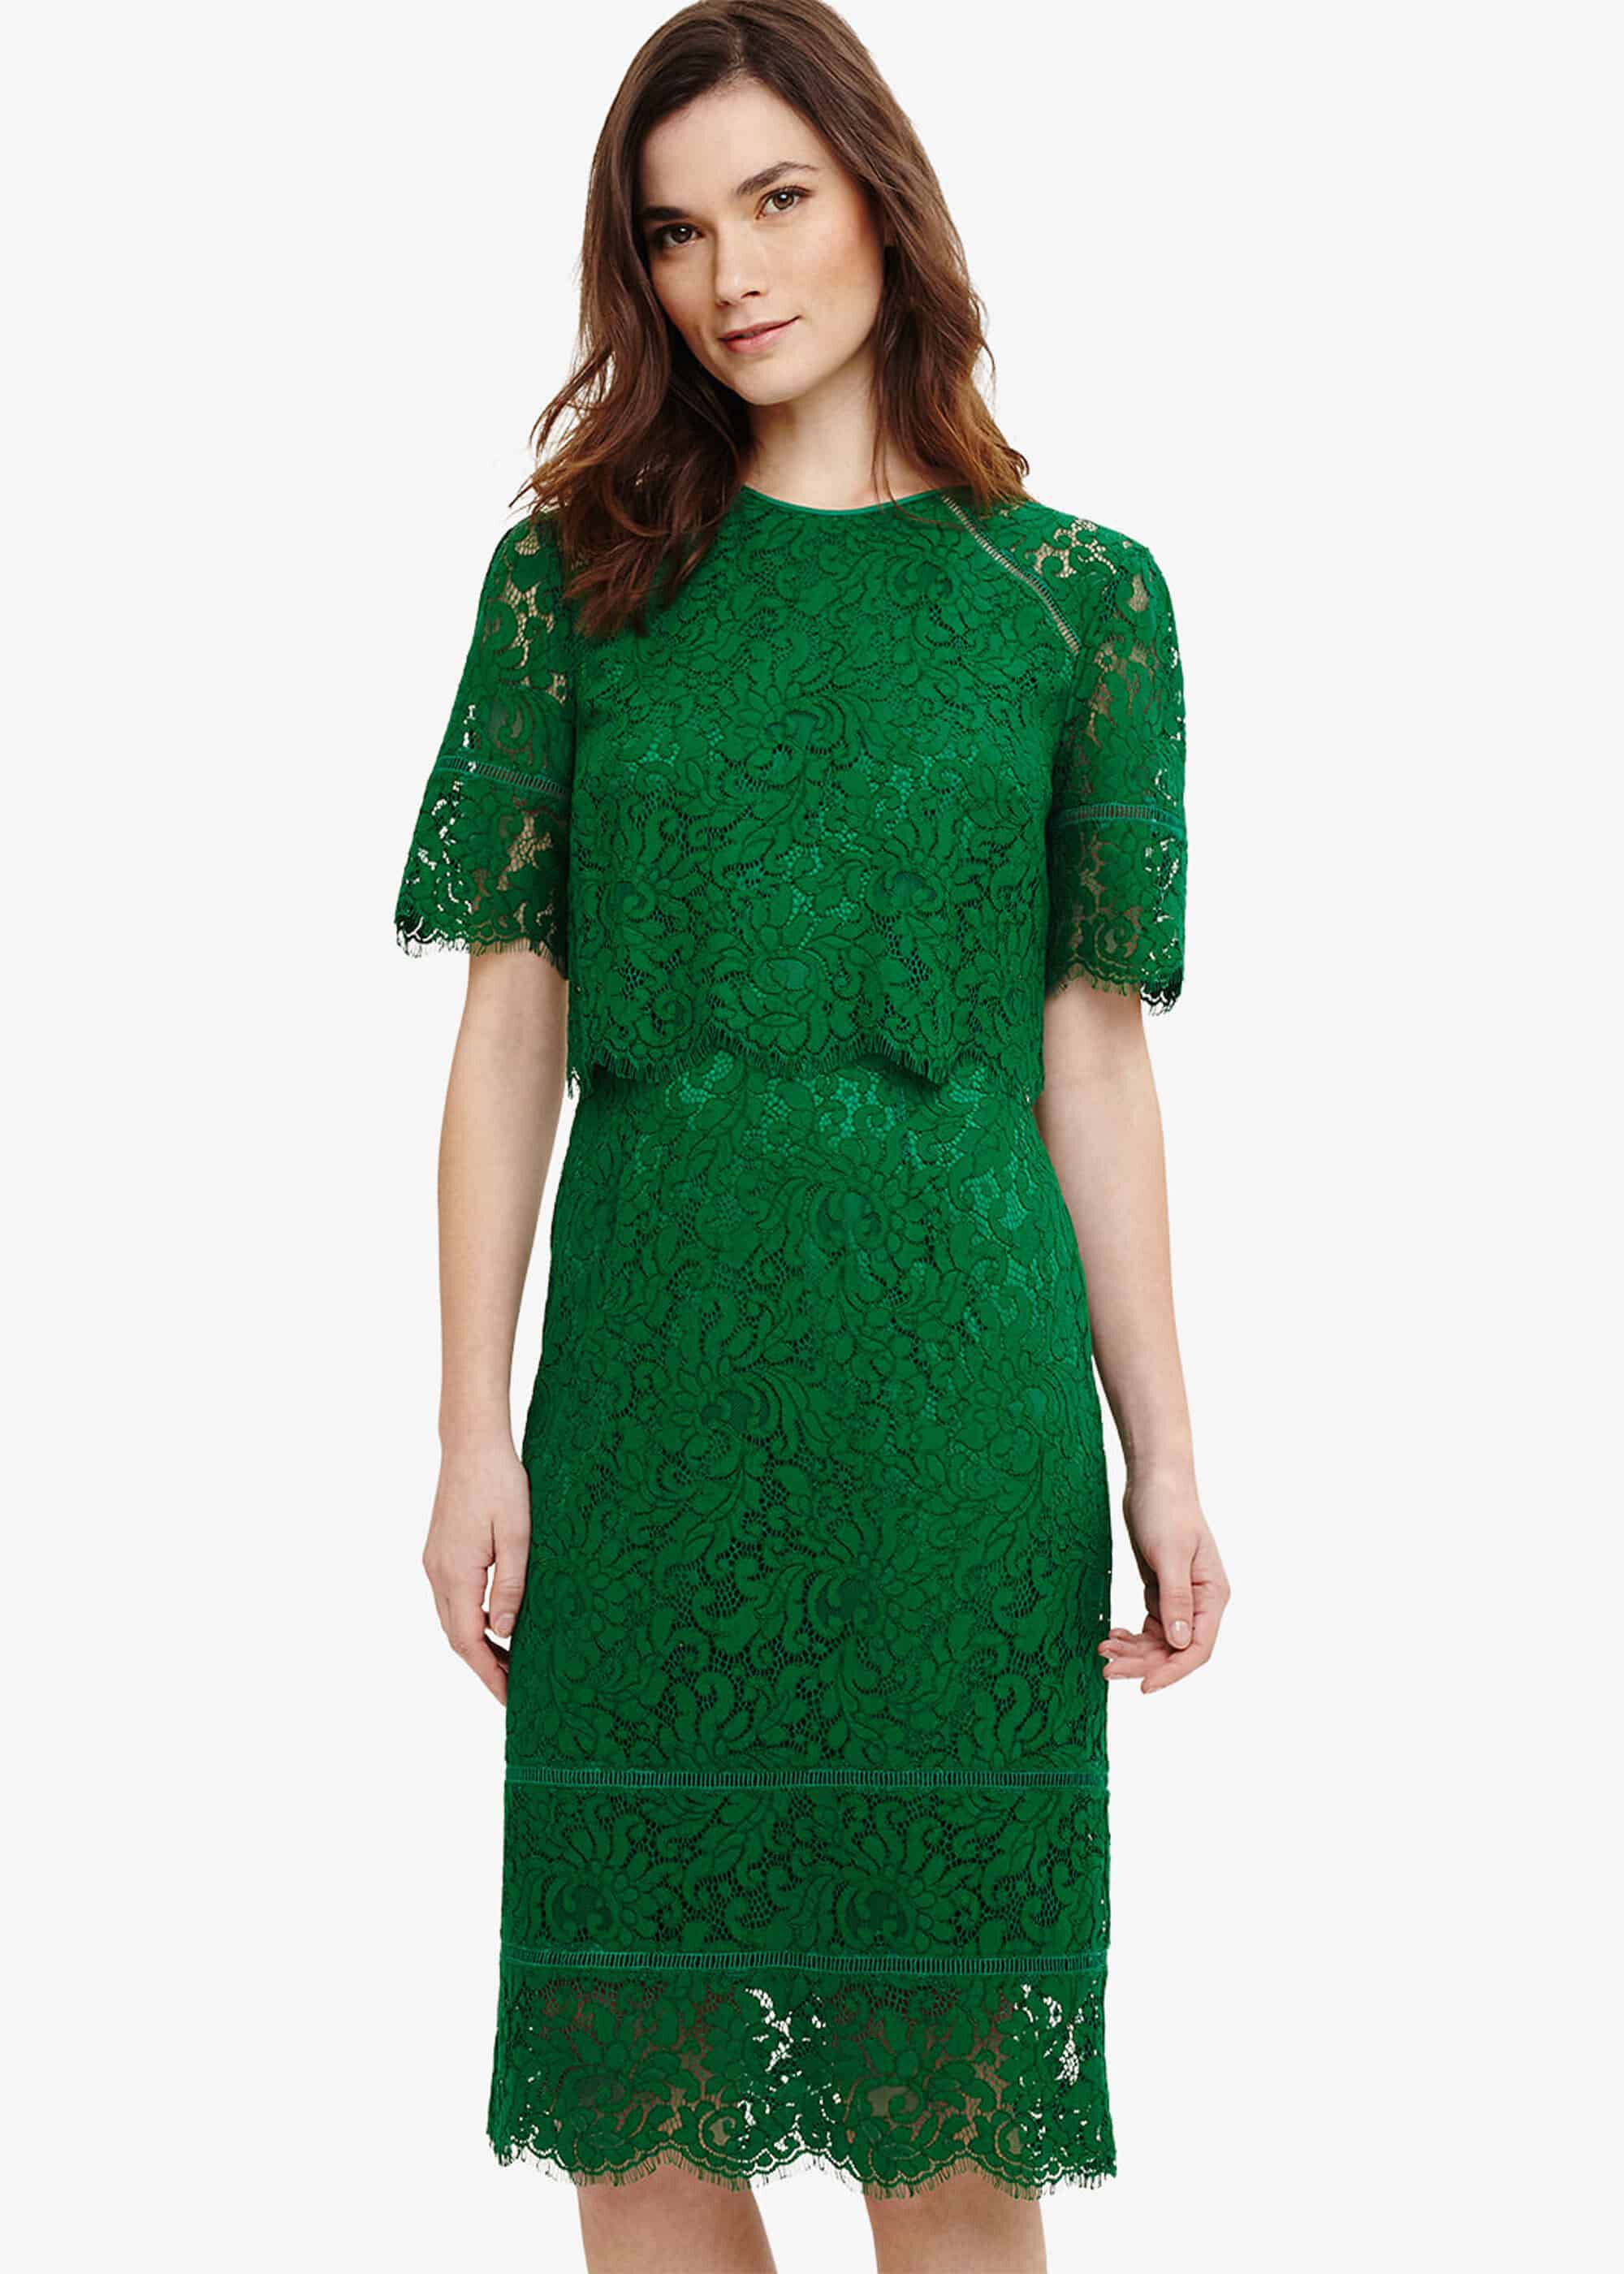 phase 8 green dress | Dresses Images 2022